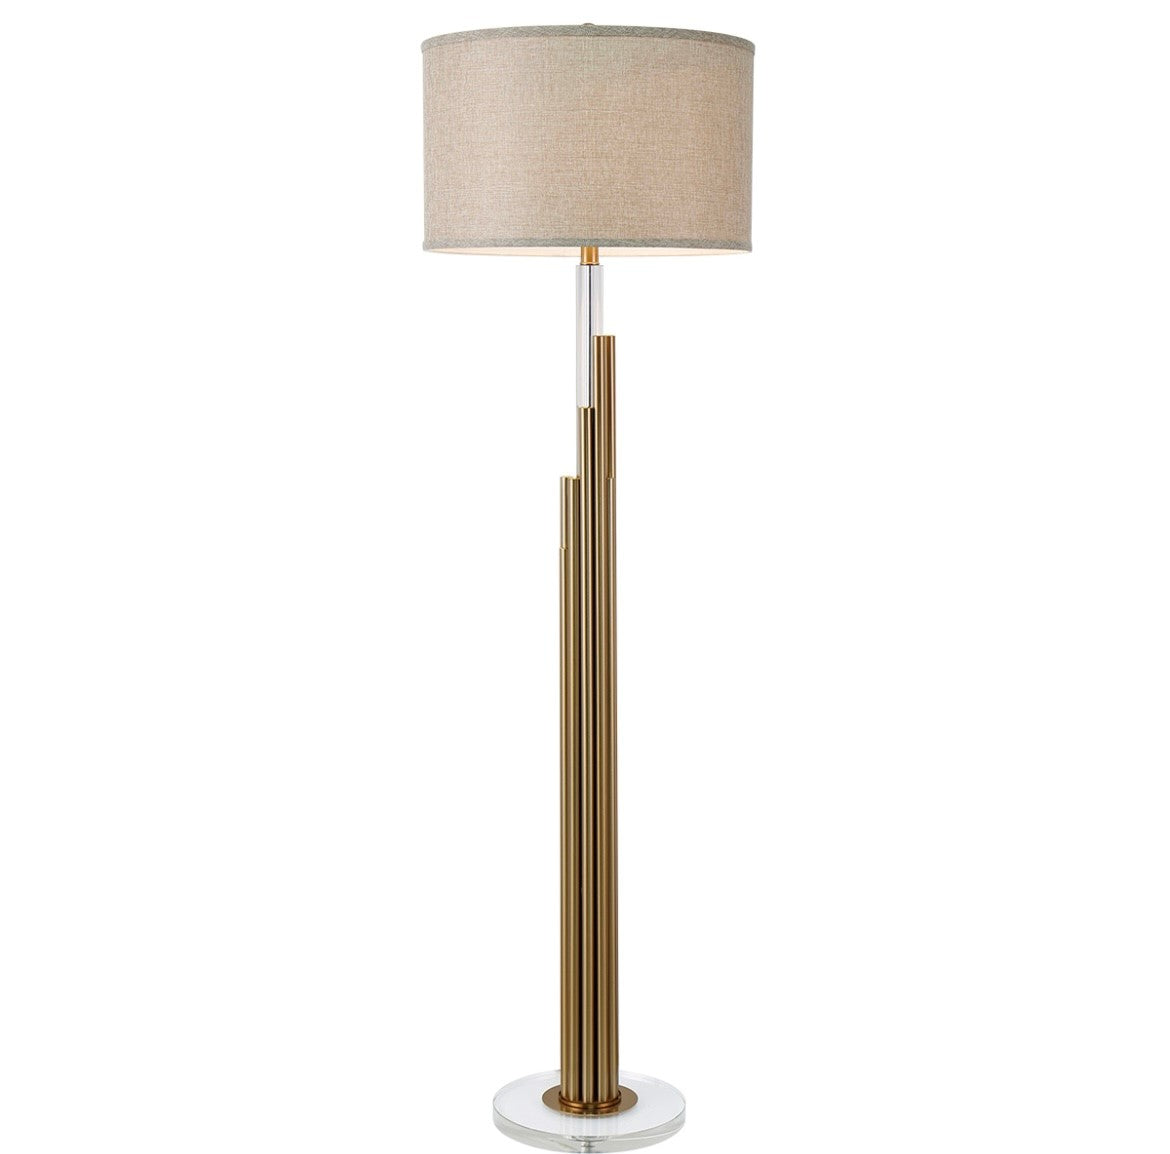 Floor lamp, Statement floor lamp, Tall lamp, large lamp, Lighting, Furniture, Home decor